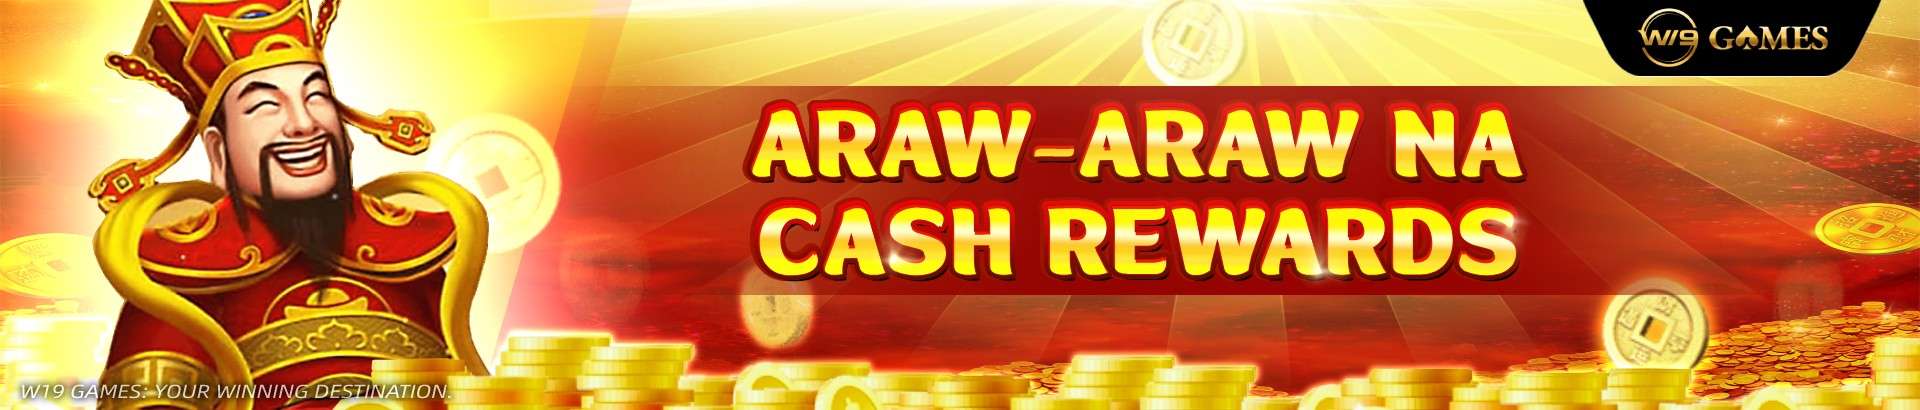 W19 Games - Araw-araw na Cash Rewards